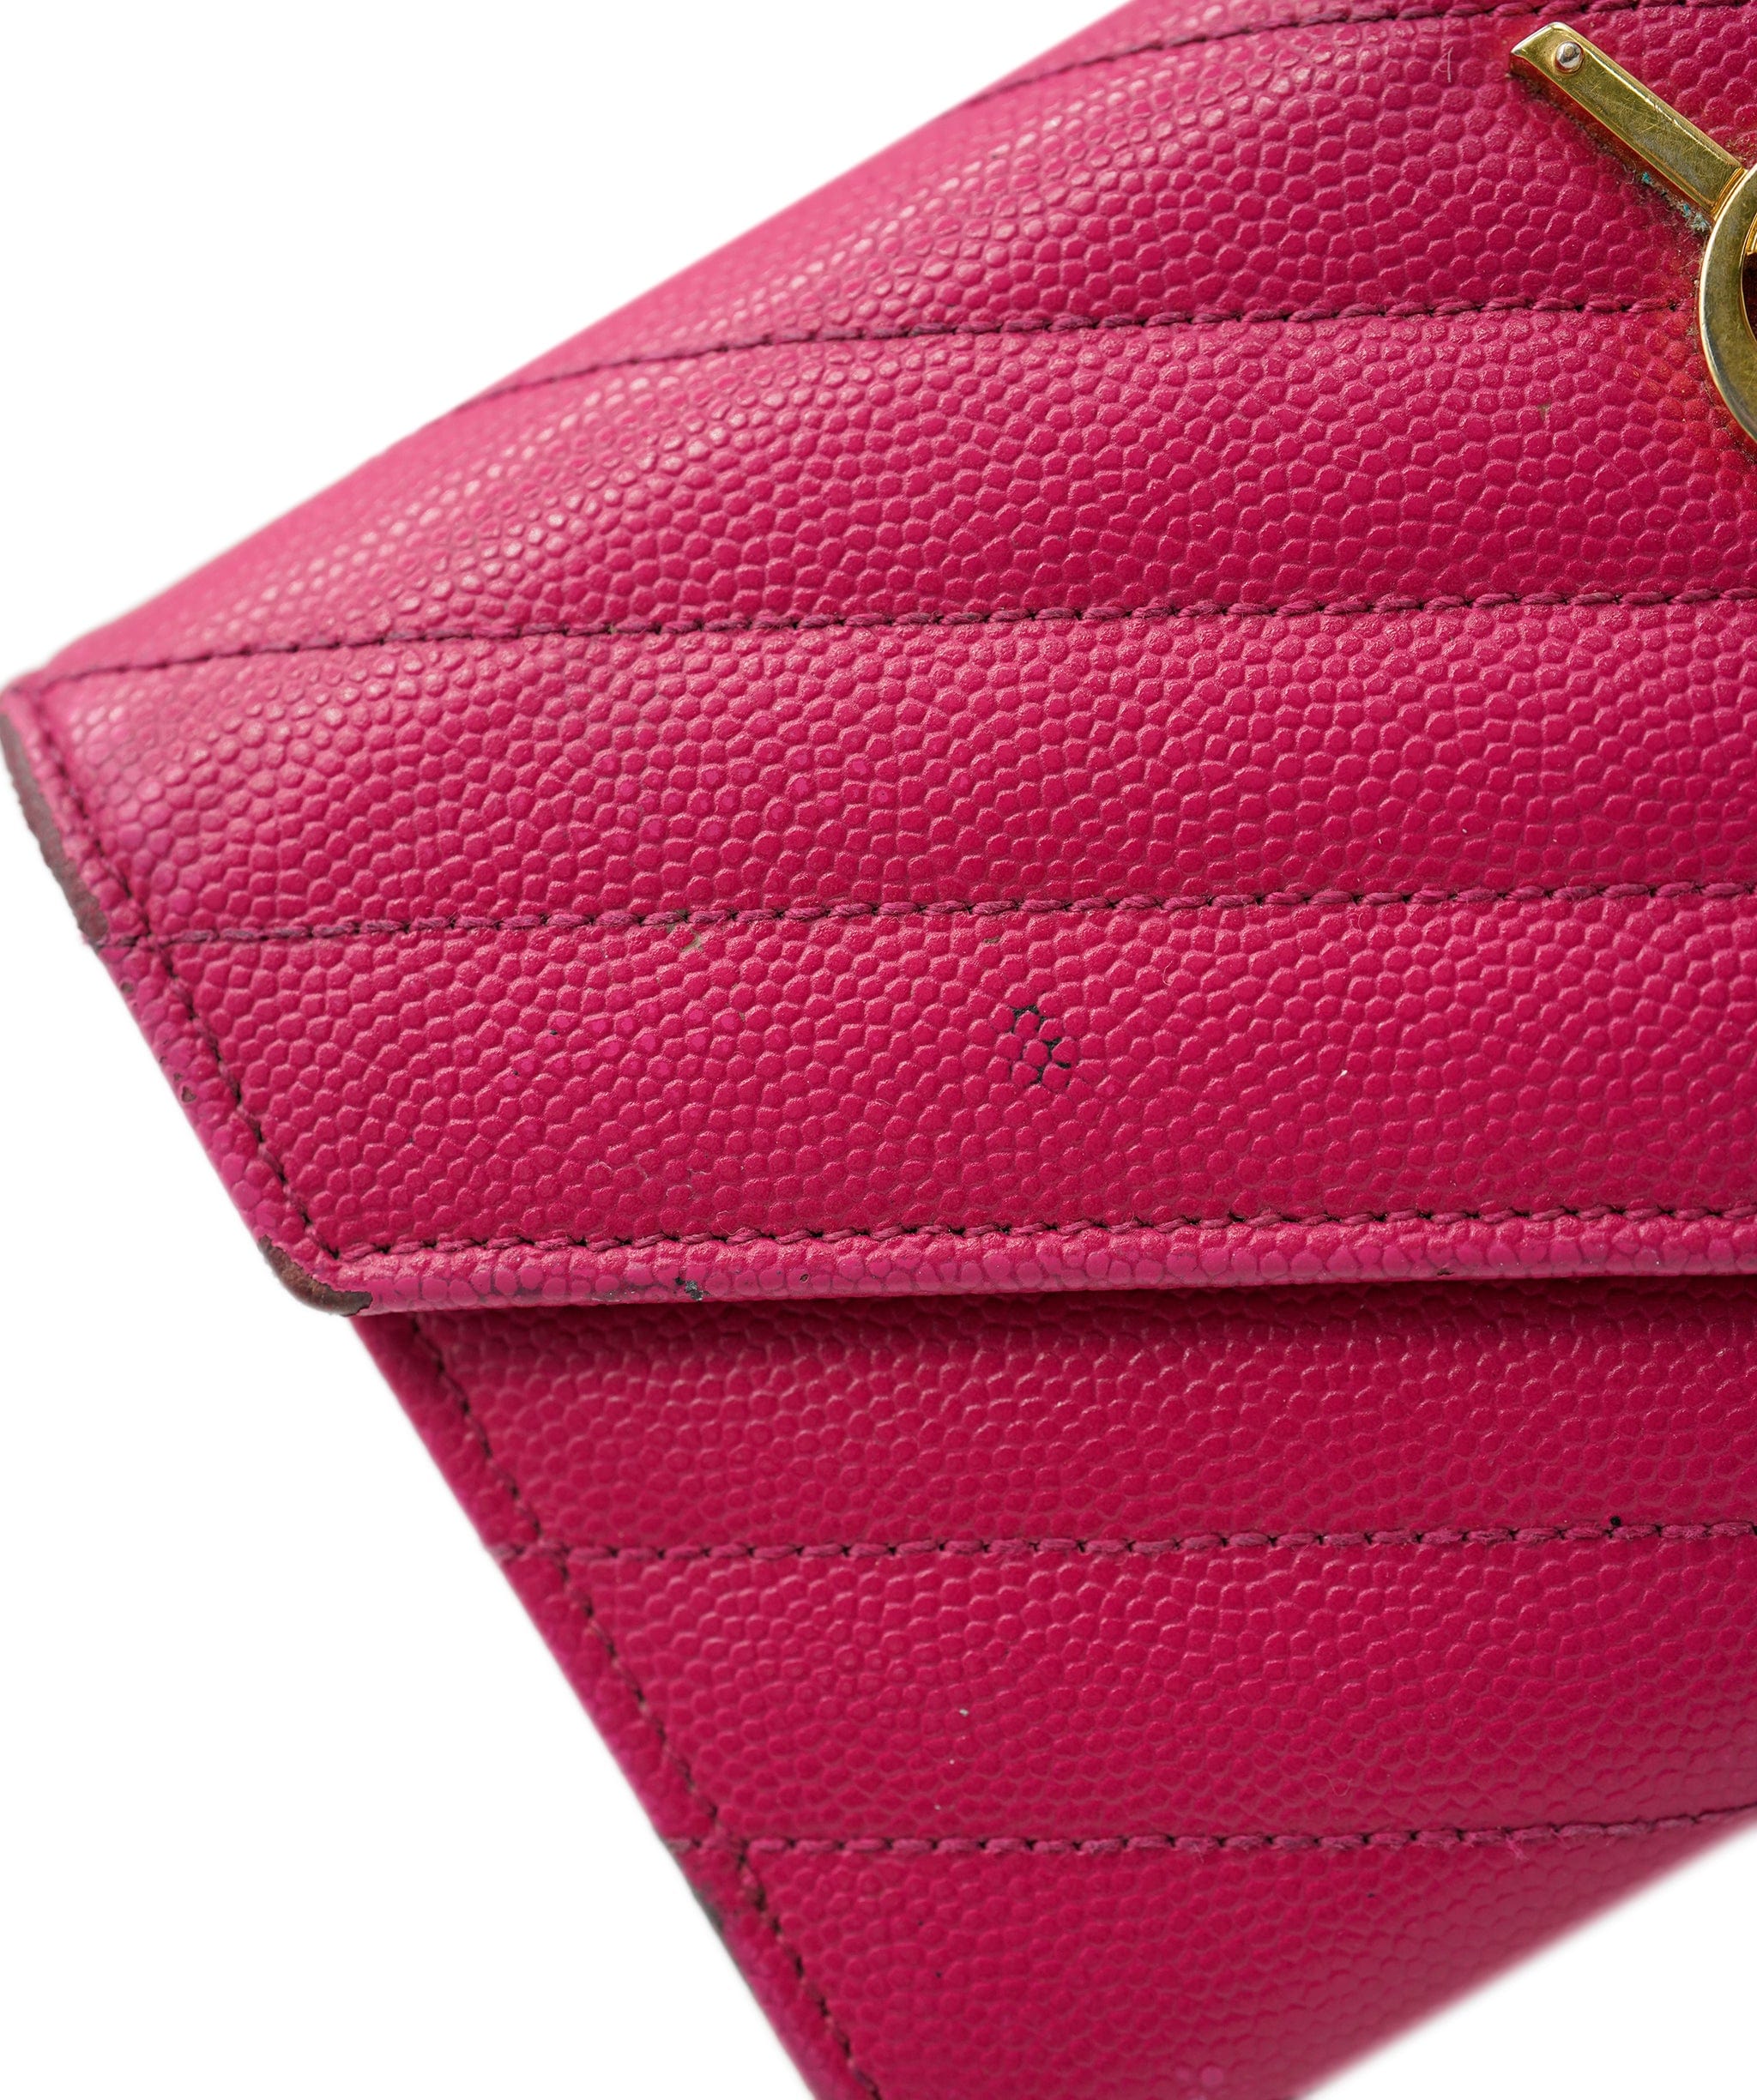 Yves Saint Laurent YSL hot pink chevron wallet  - AJC0457